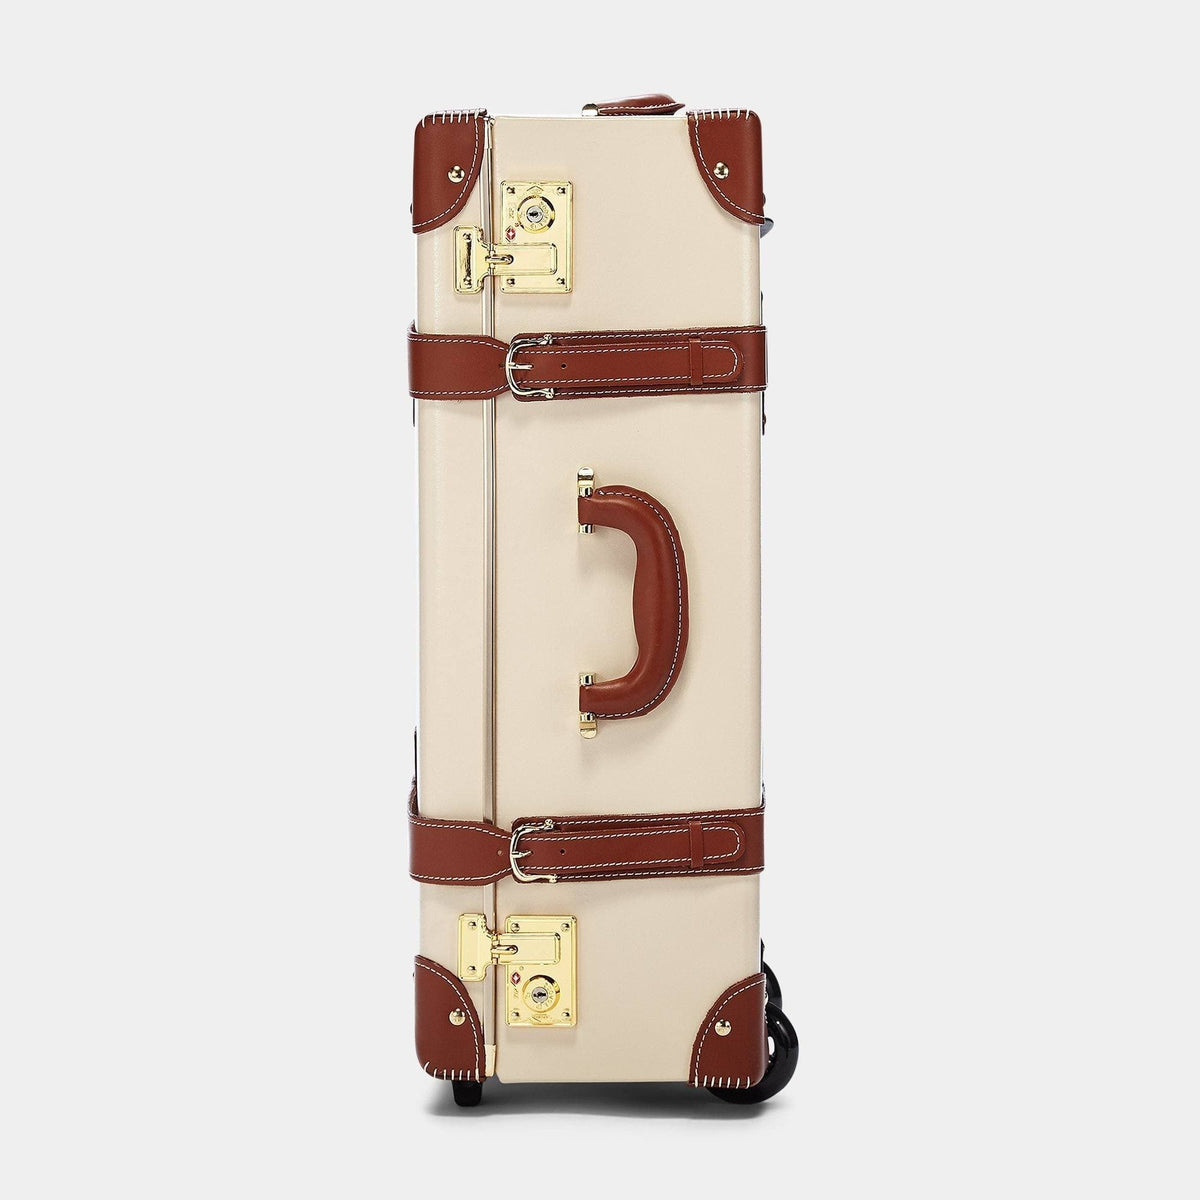 The Diplomat - Cream Stowaway Stowaway Steamline Luggage 